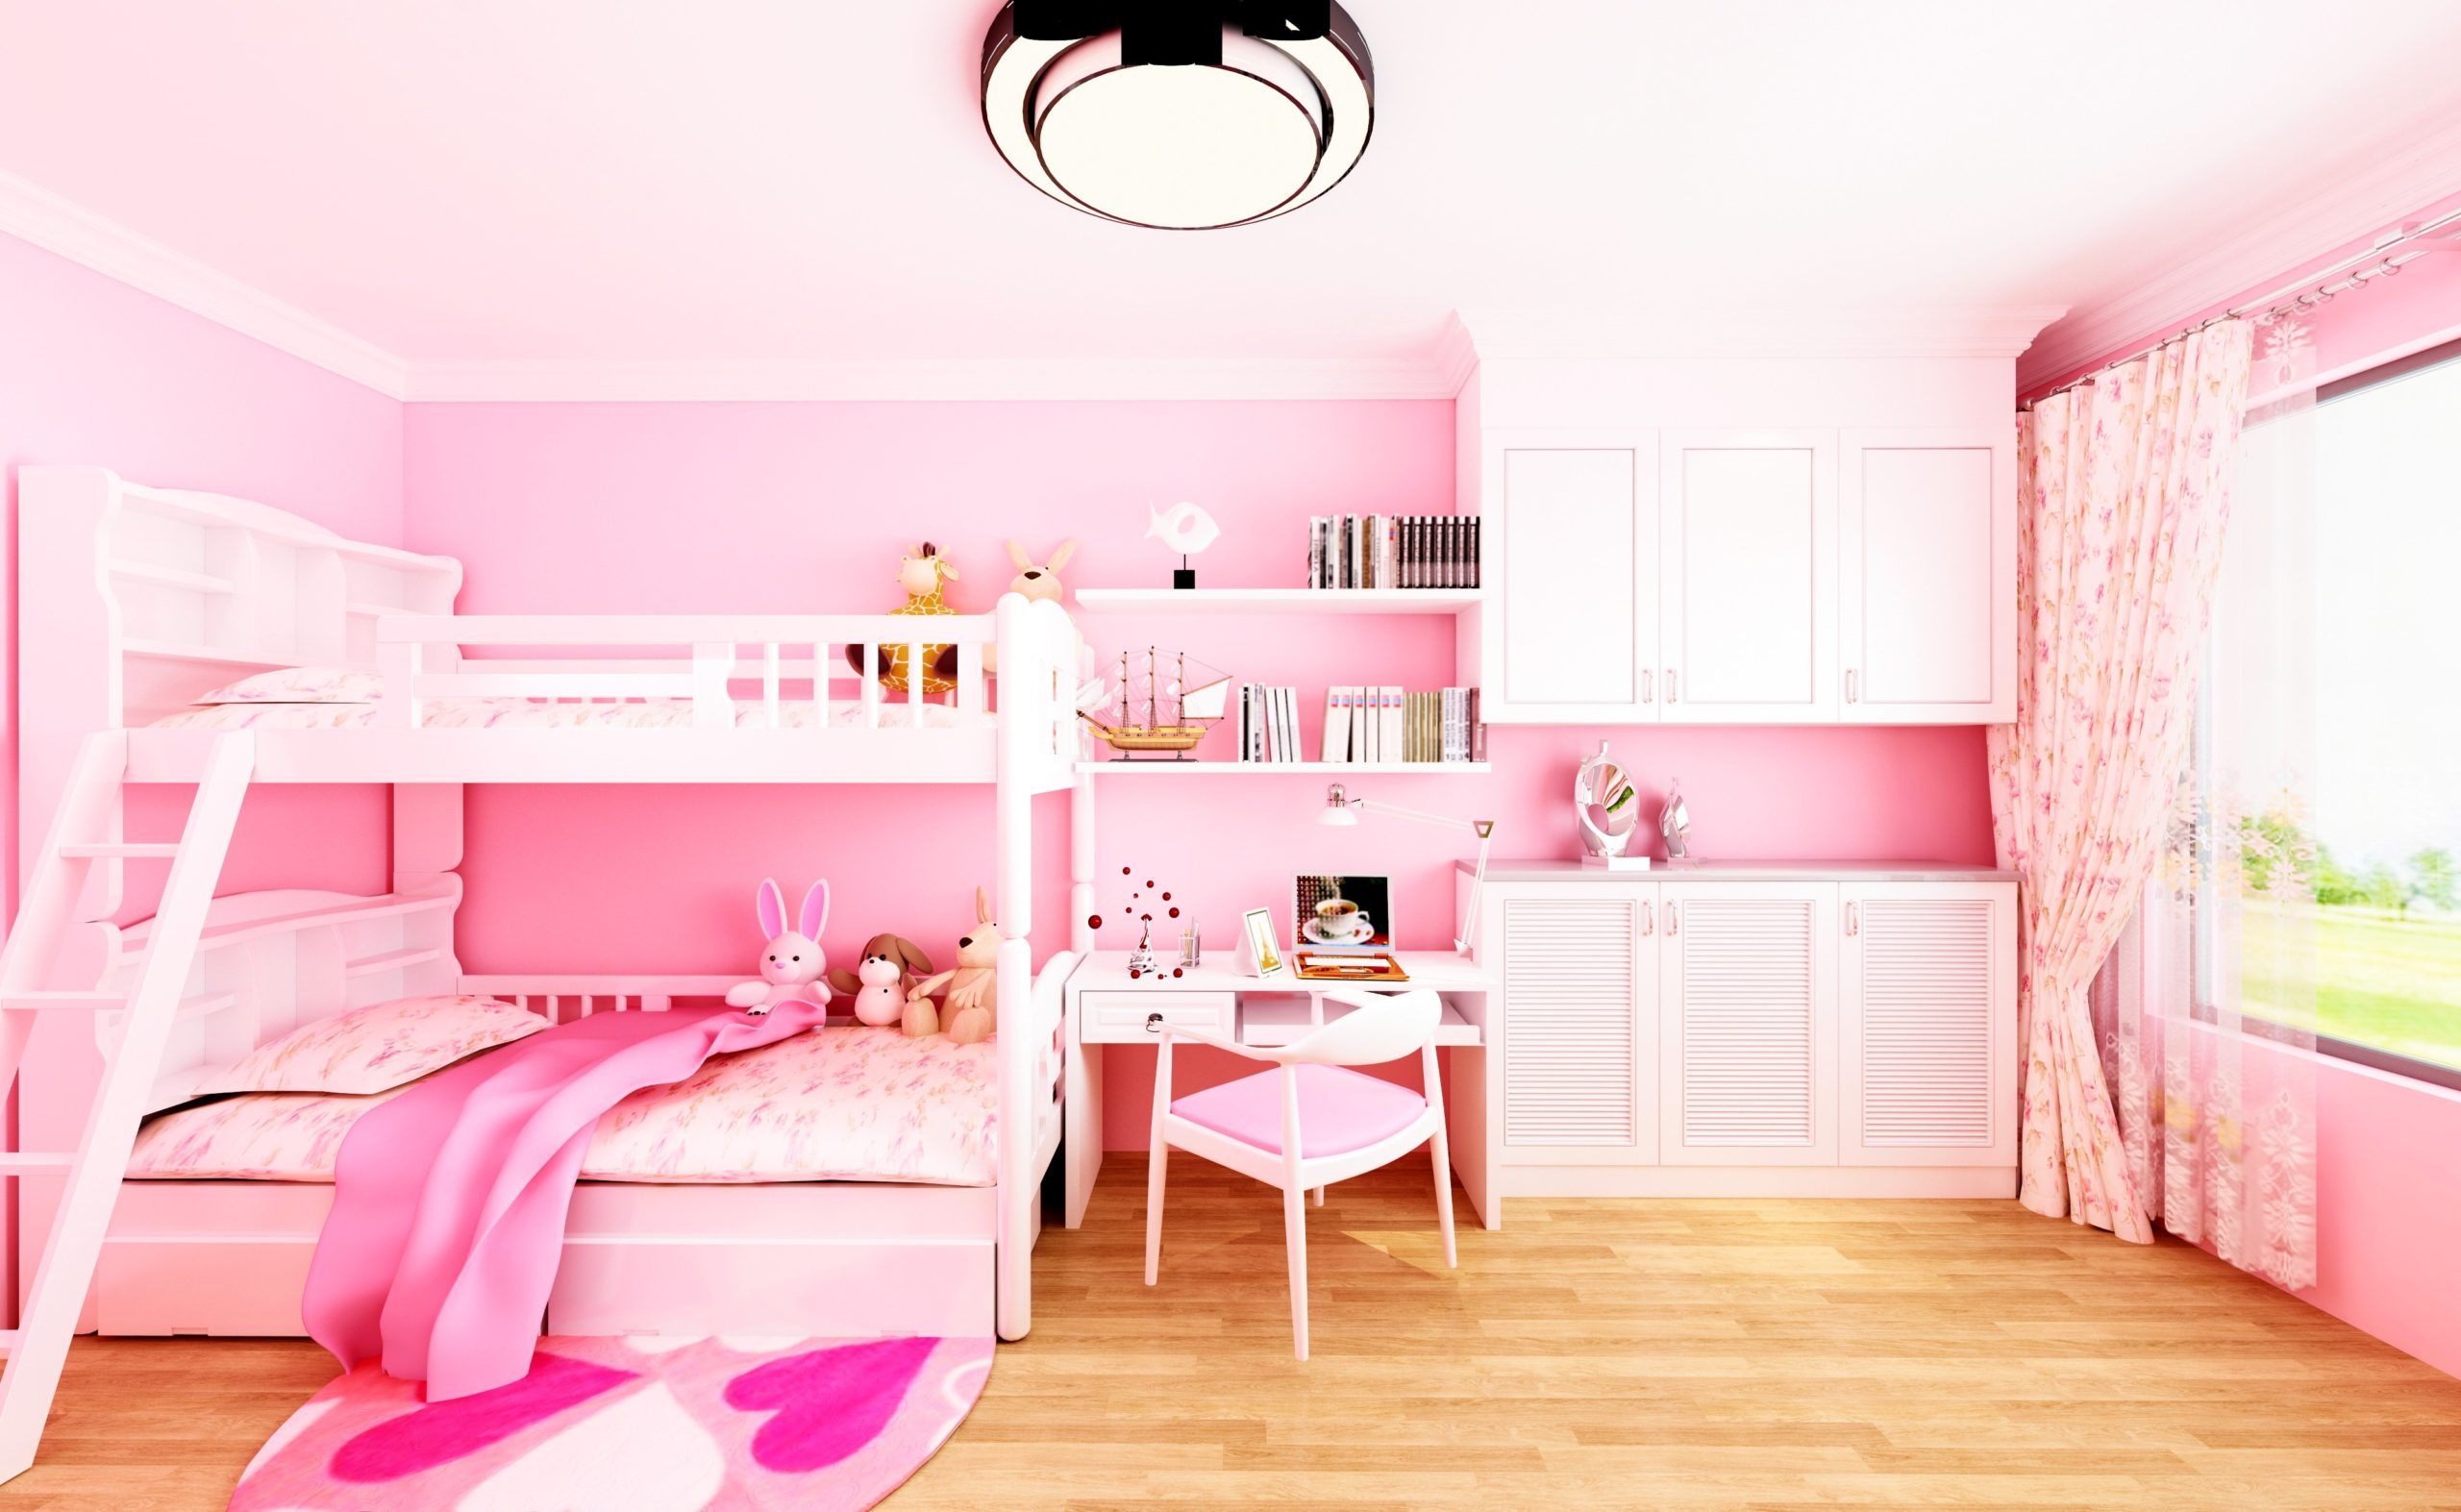 <img src="kids.jpg" alt="kids pink bedroom with bunk beds"/> 